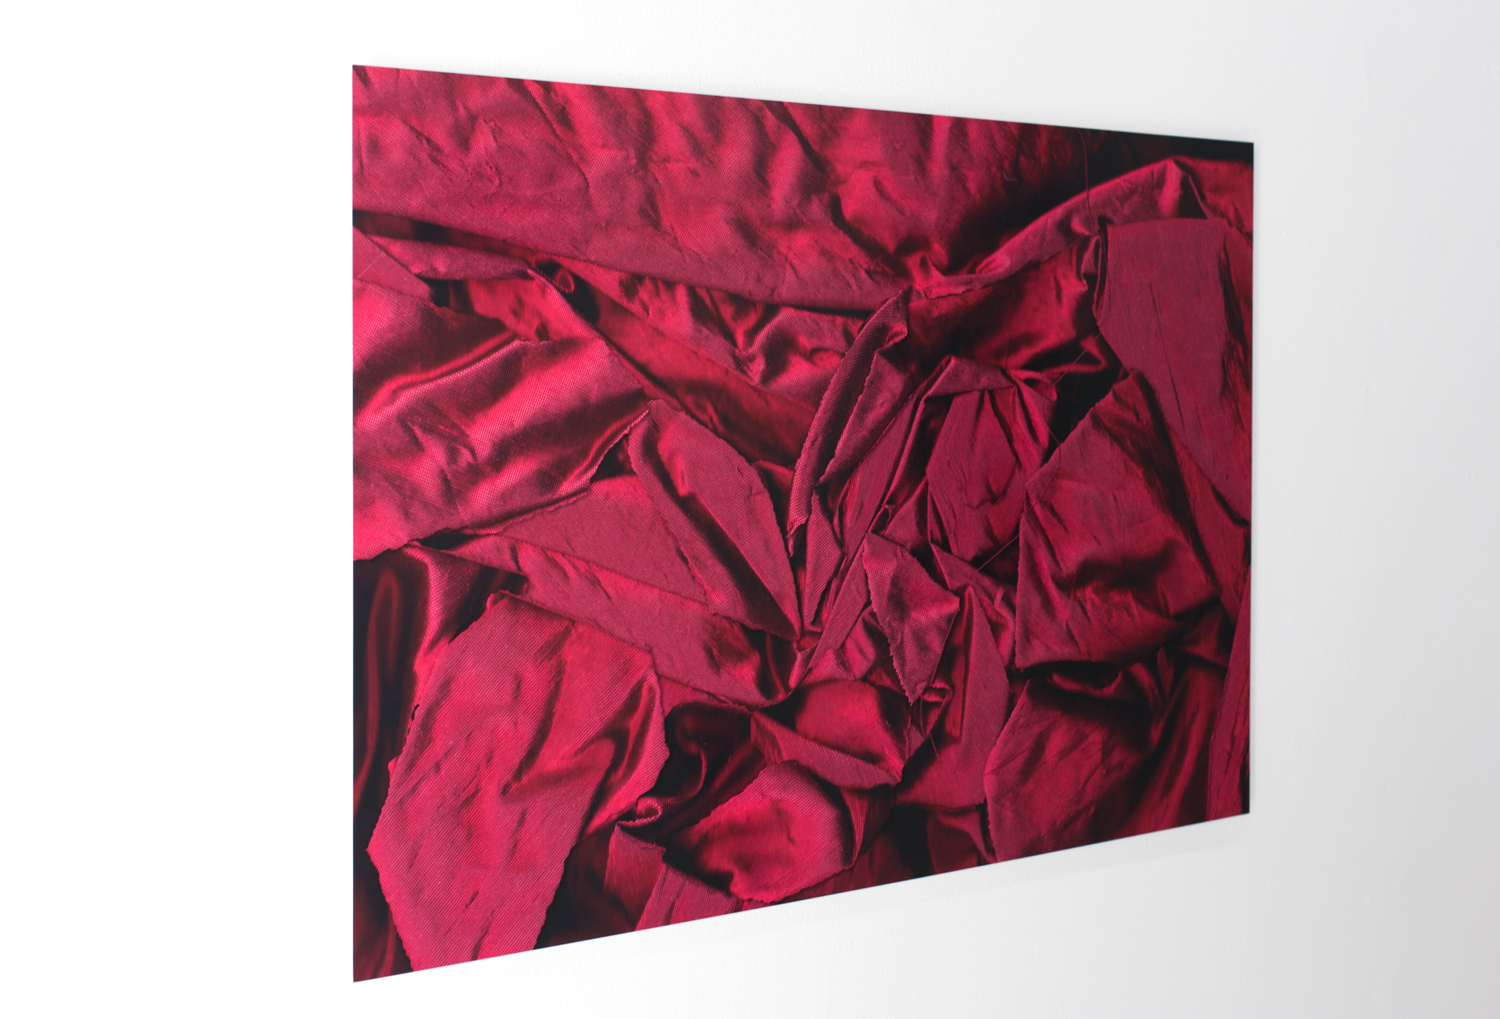   A louder cellophane , 2019, dye-sublimation print on aluminium, 51 x 76cm  Photo: Xavier Burrow 